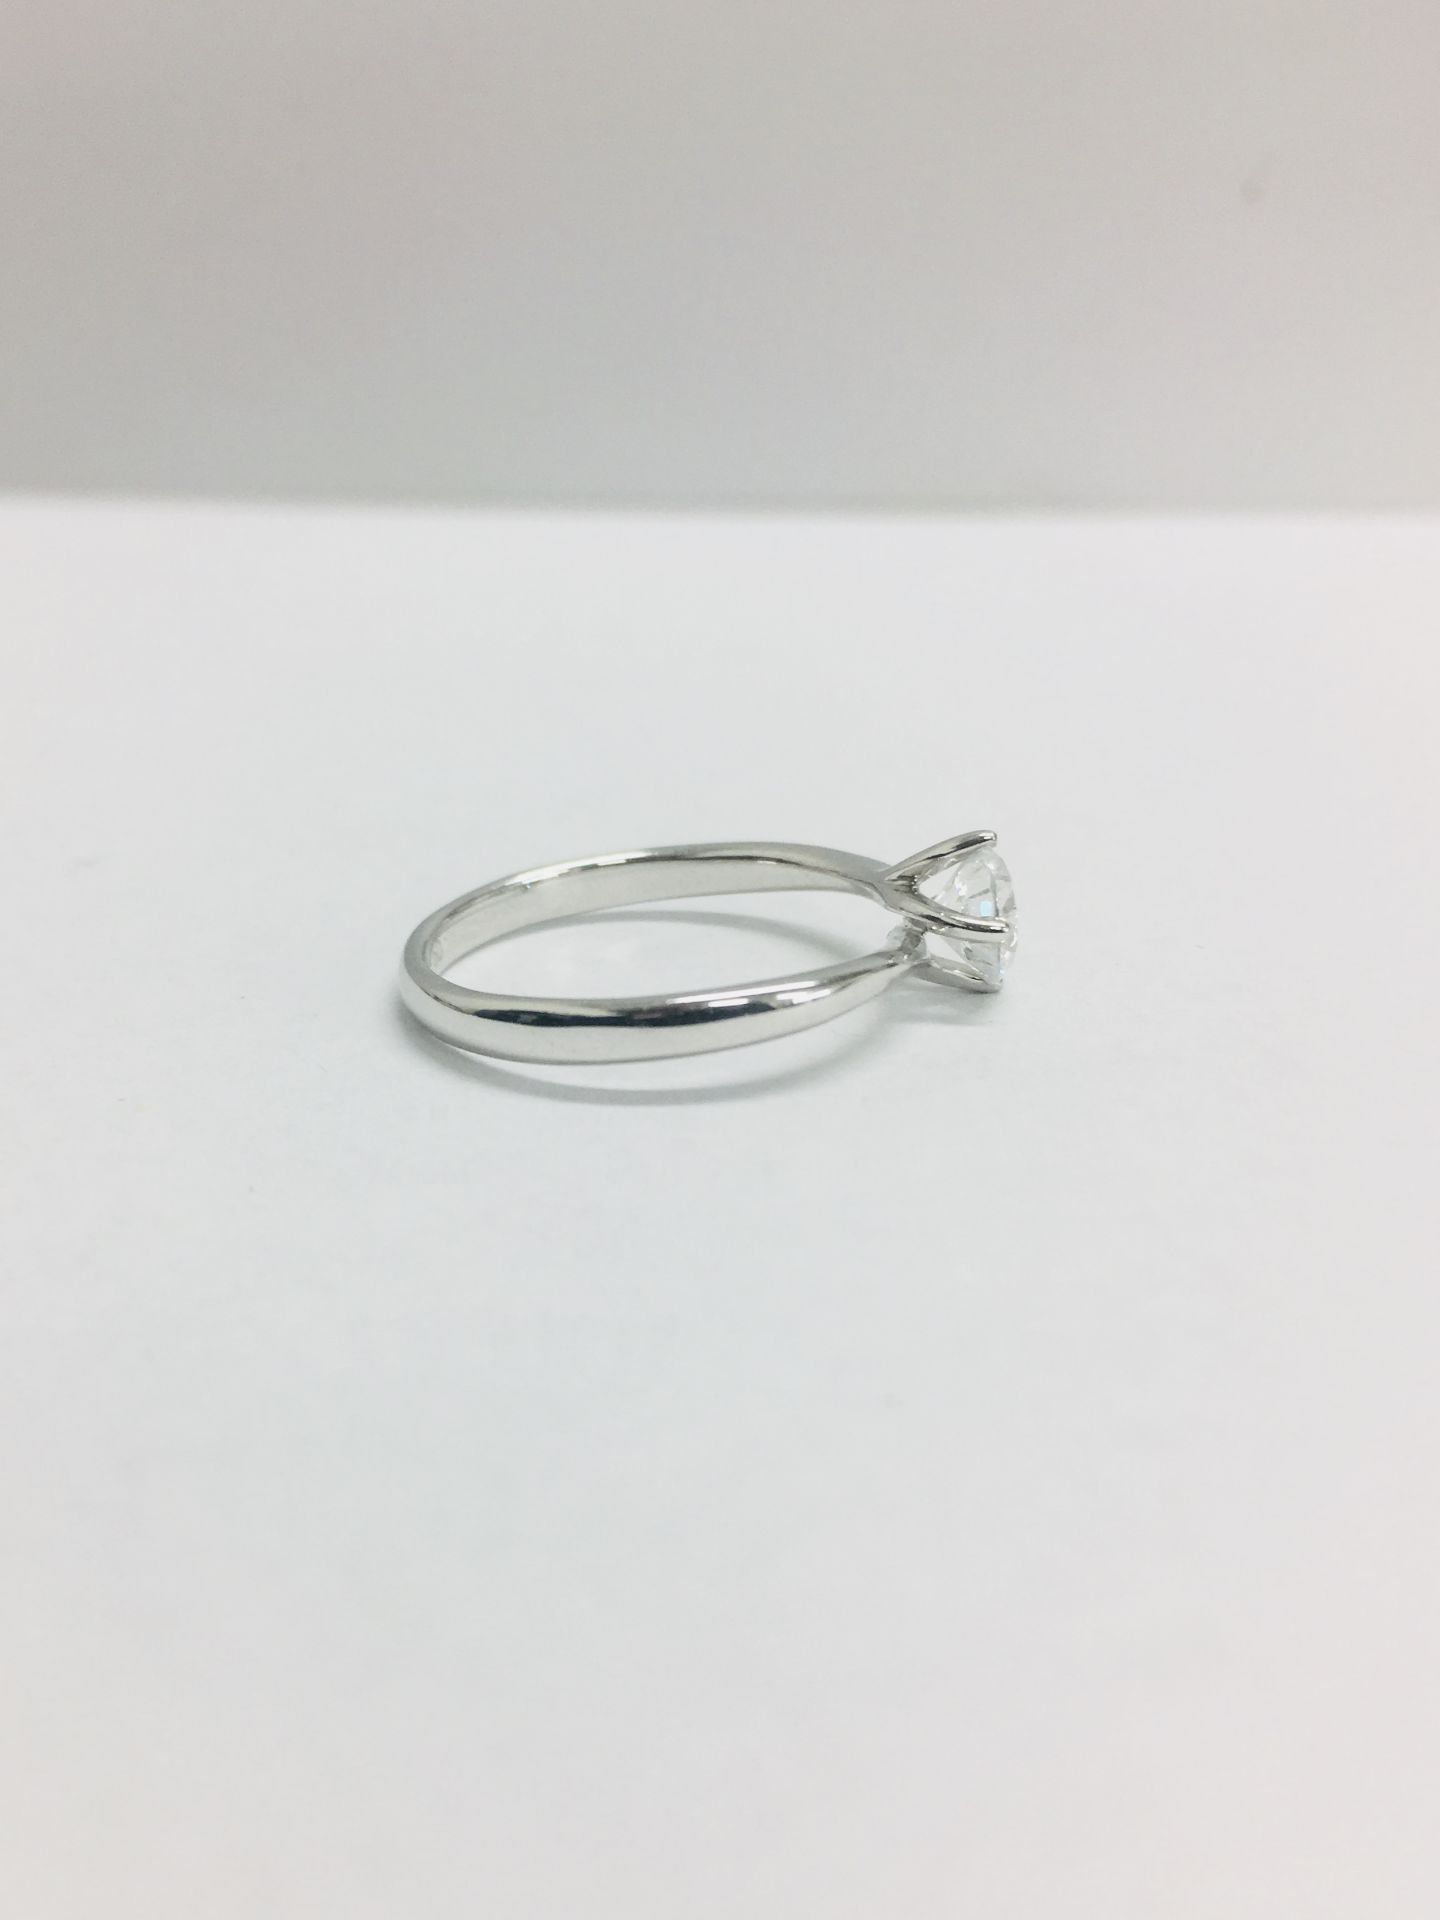 Platinum diamond twist style solitaire ring,0.50ct diamond h colour vs clarity (clarity enhanced), - Image 3 of 4